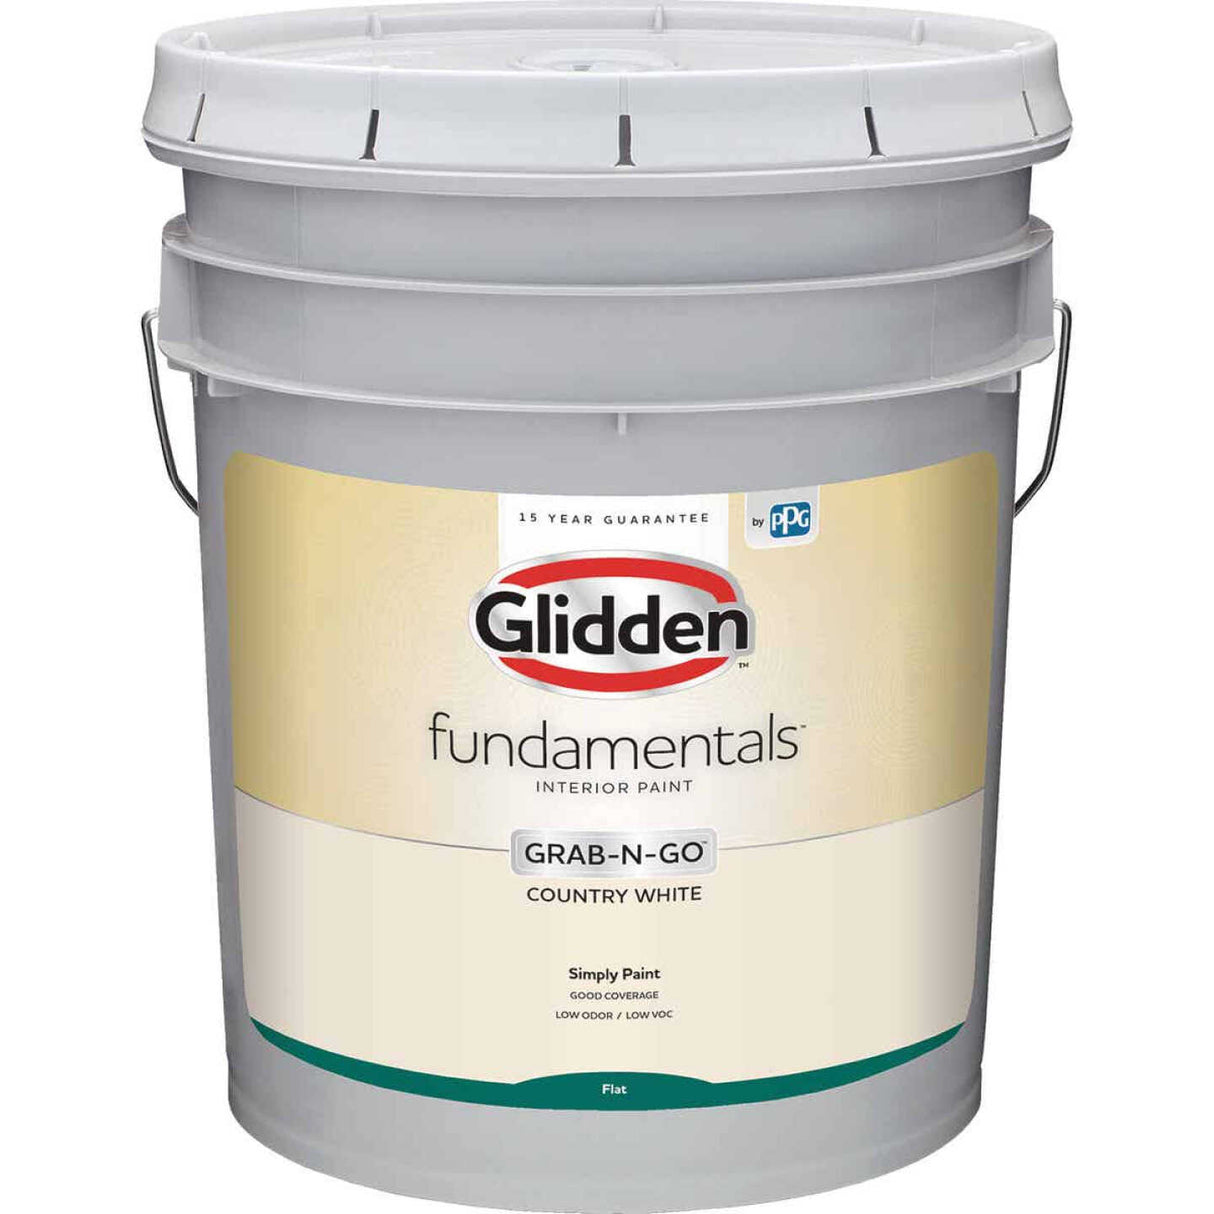 Glidden Fundamentals Grab-N-Go Country White Flat